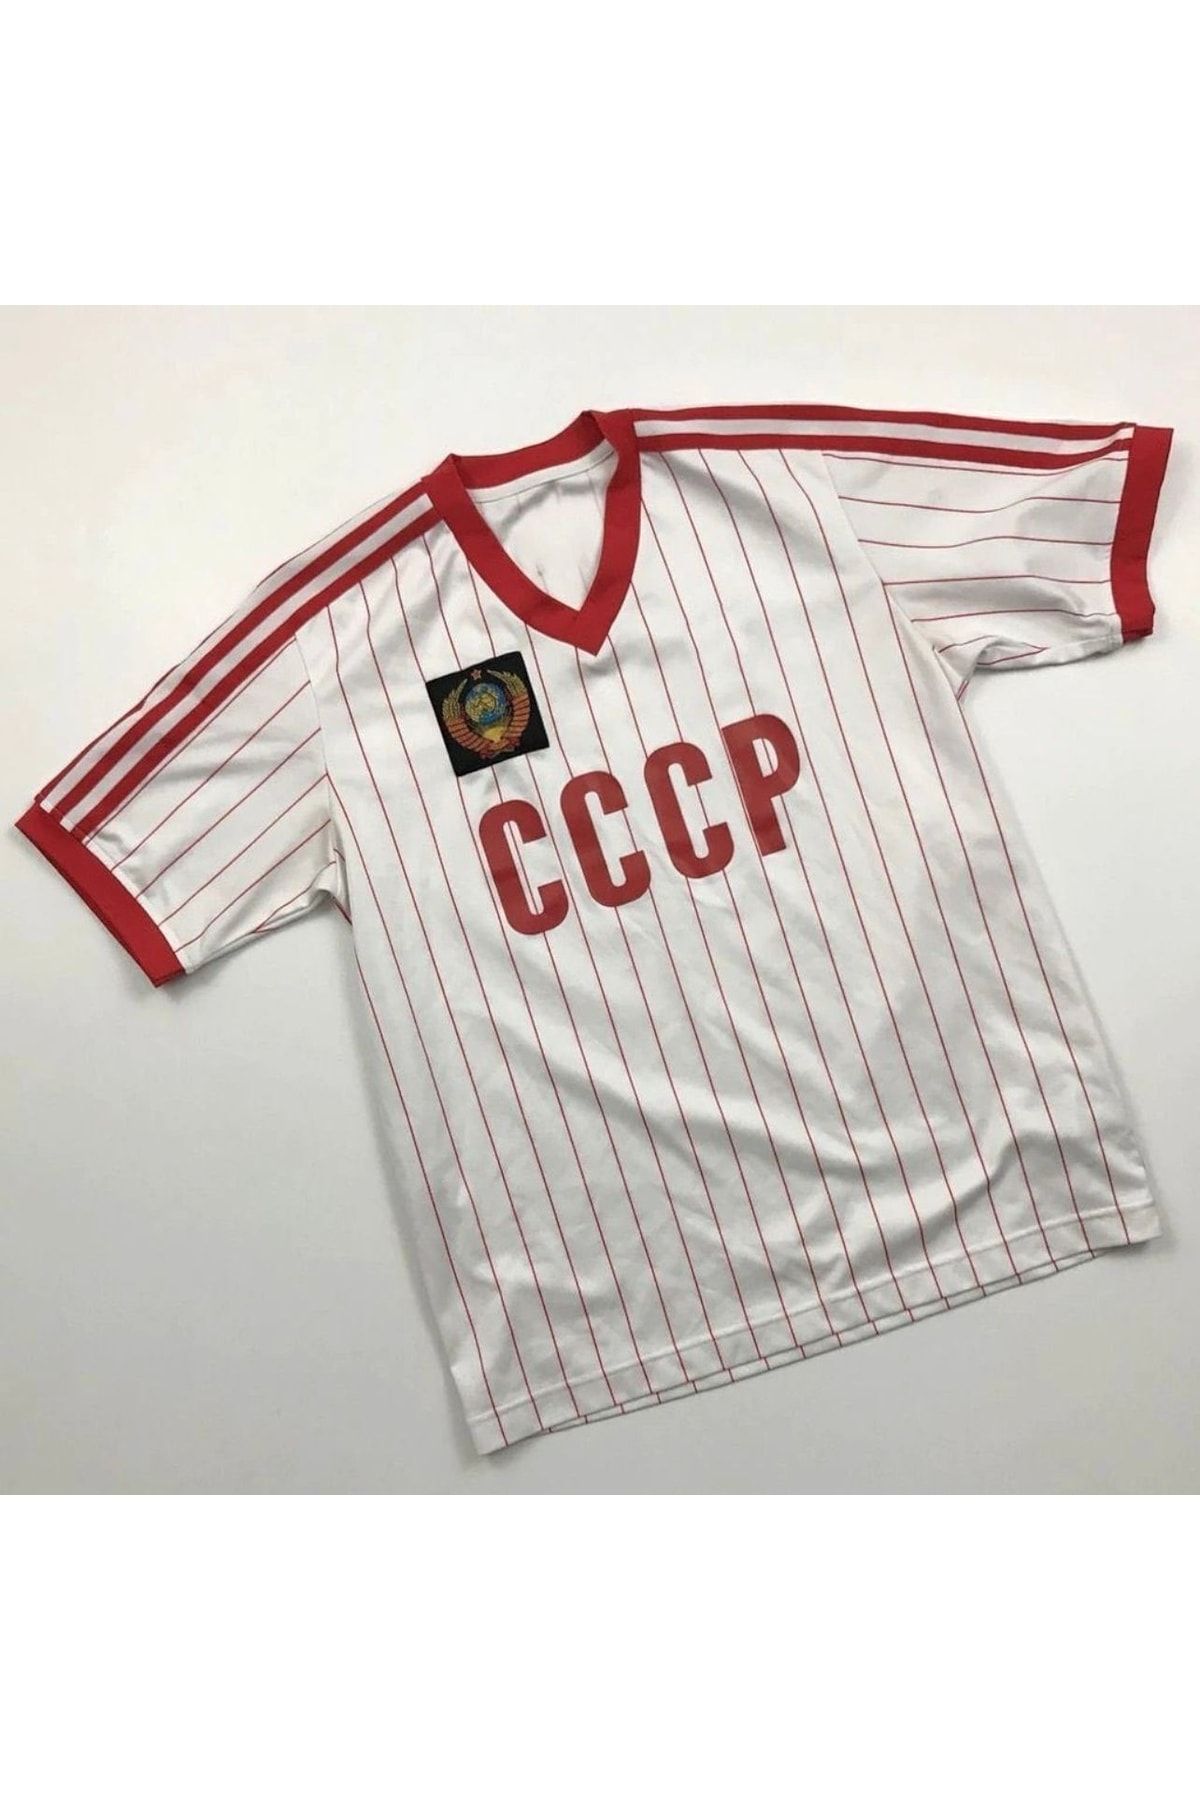 Pasxaspor Nostalji Cccp Sovyet Forma Modeli ps-868545712